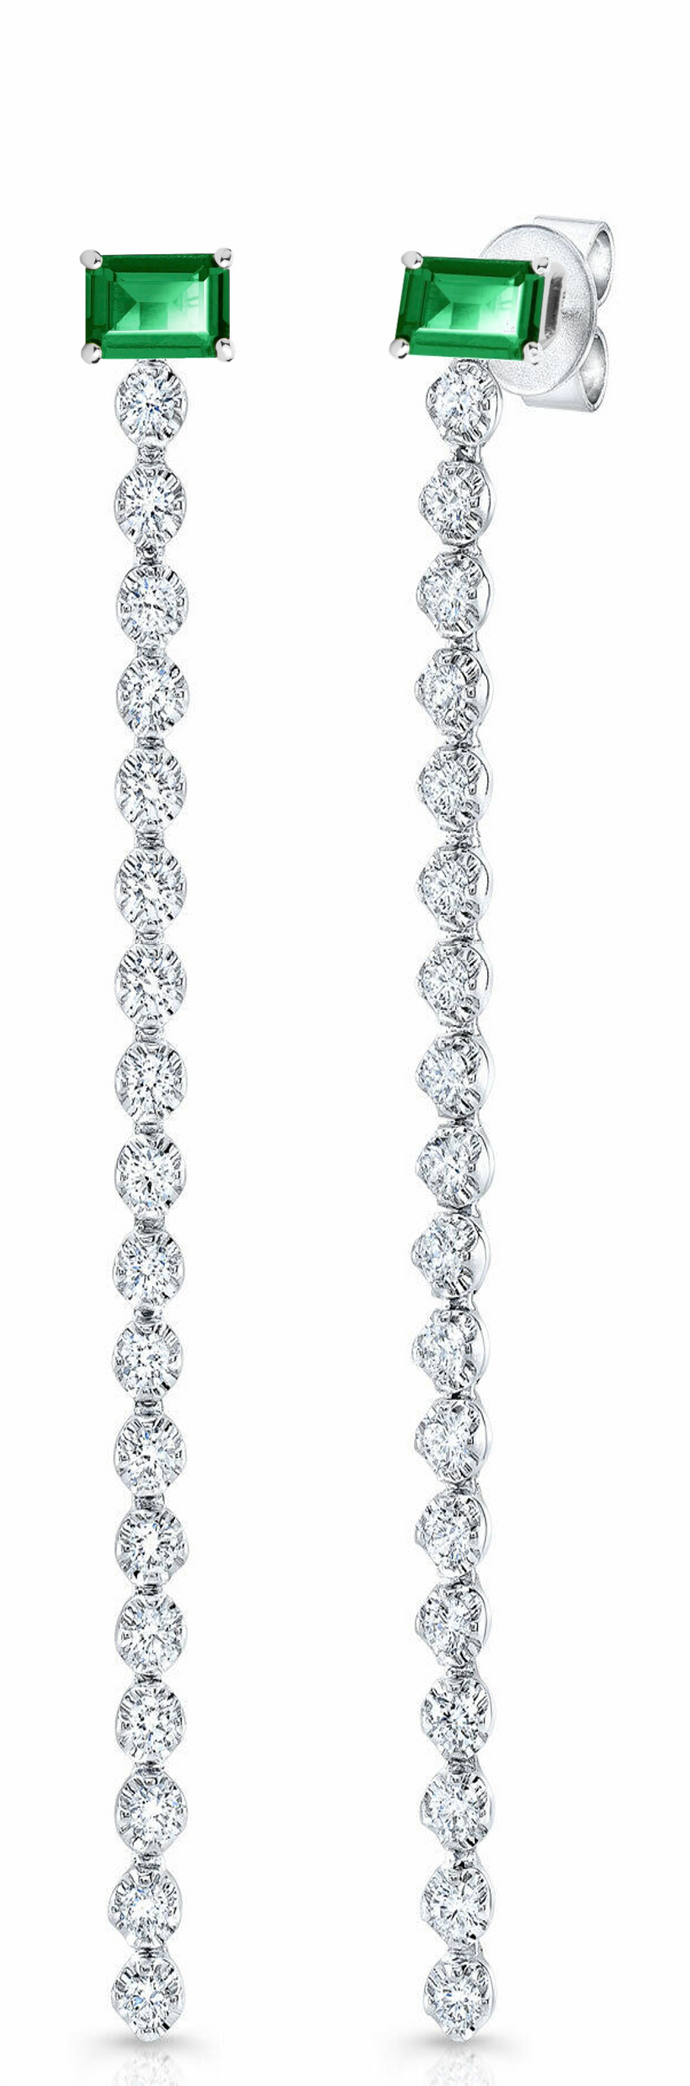 Christine Emerald Diamond Earrings